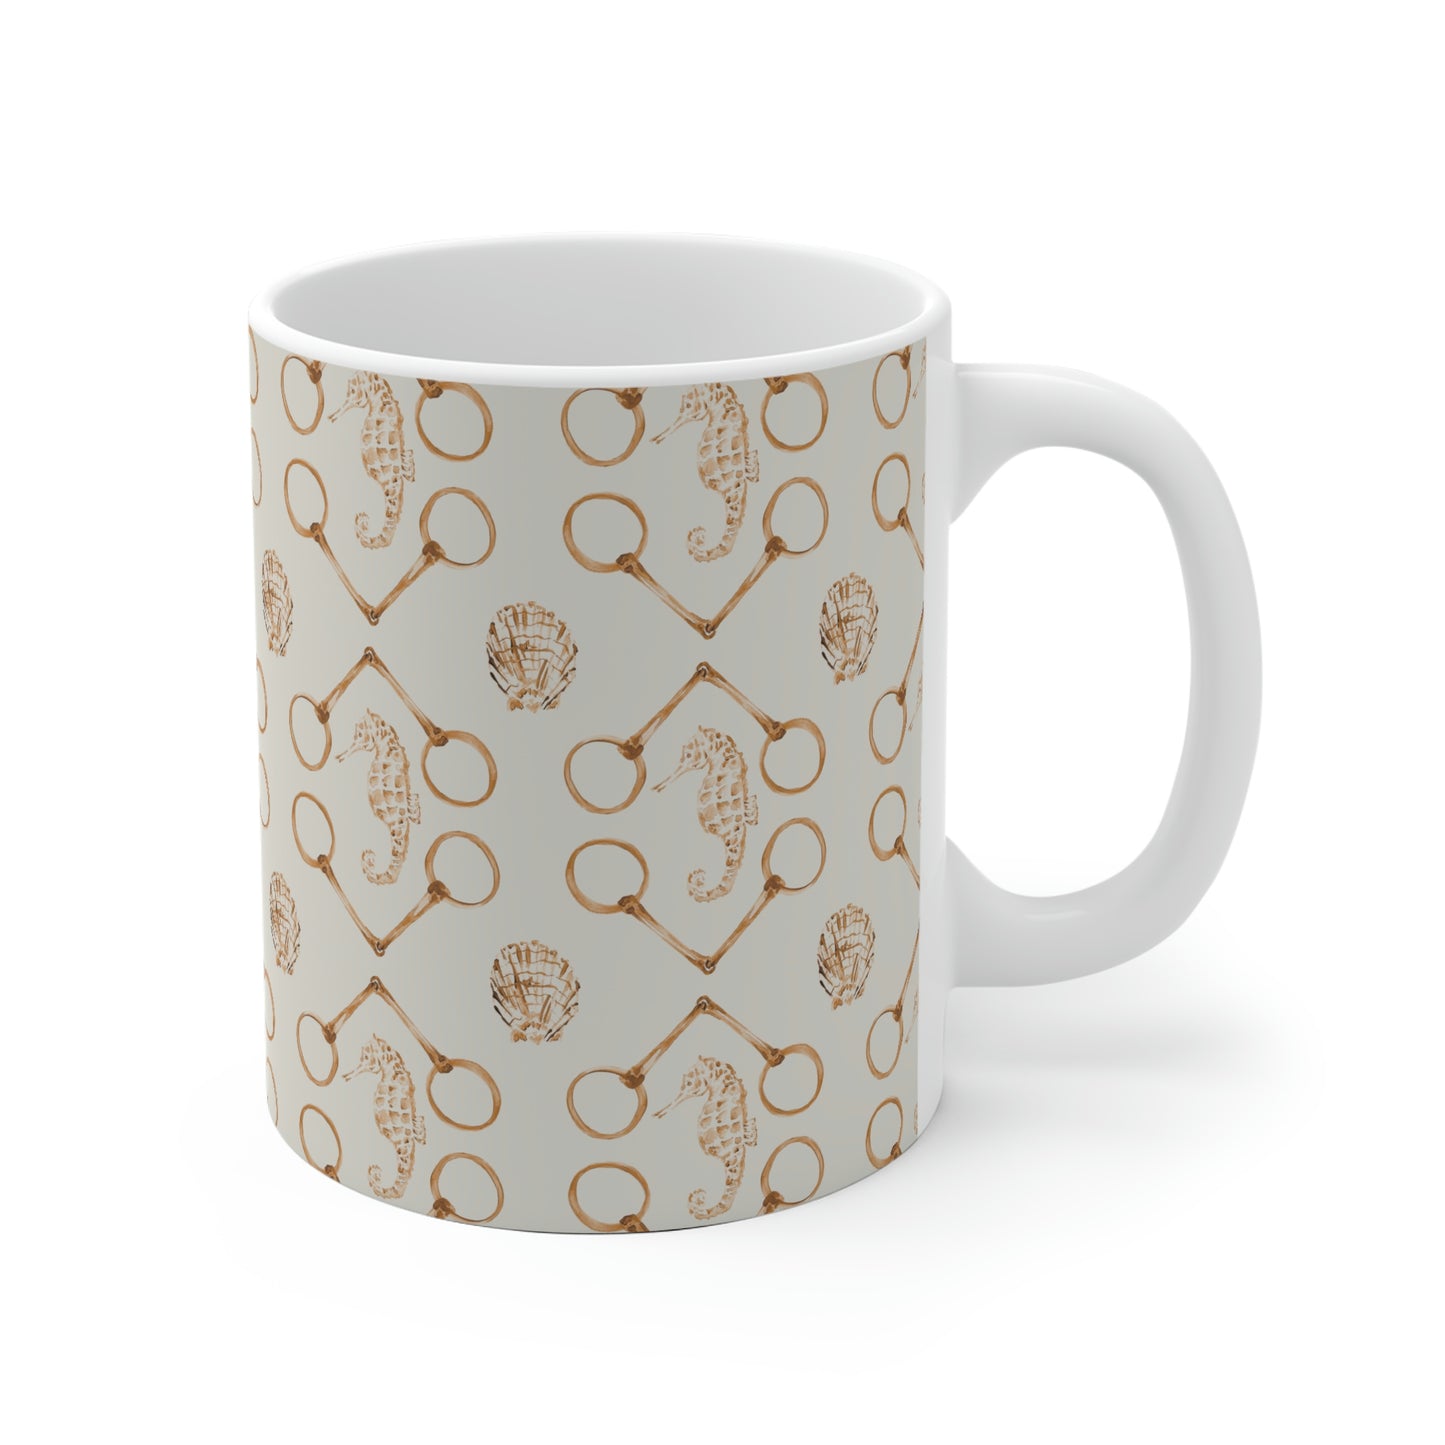 Sea Horse and Bit- Spice White Ceramic Mug